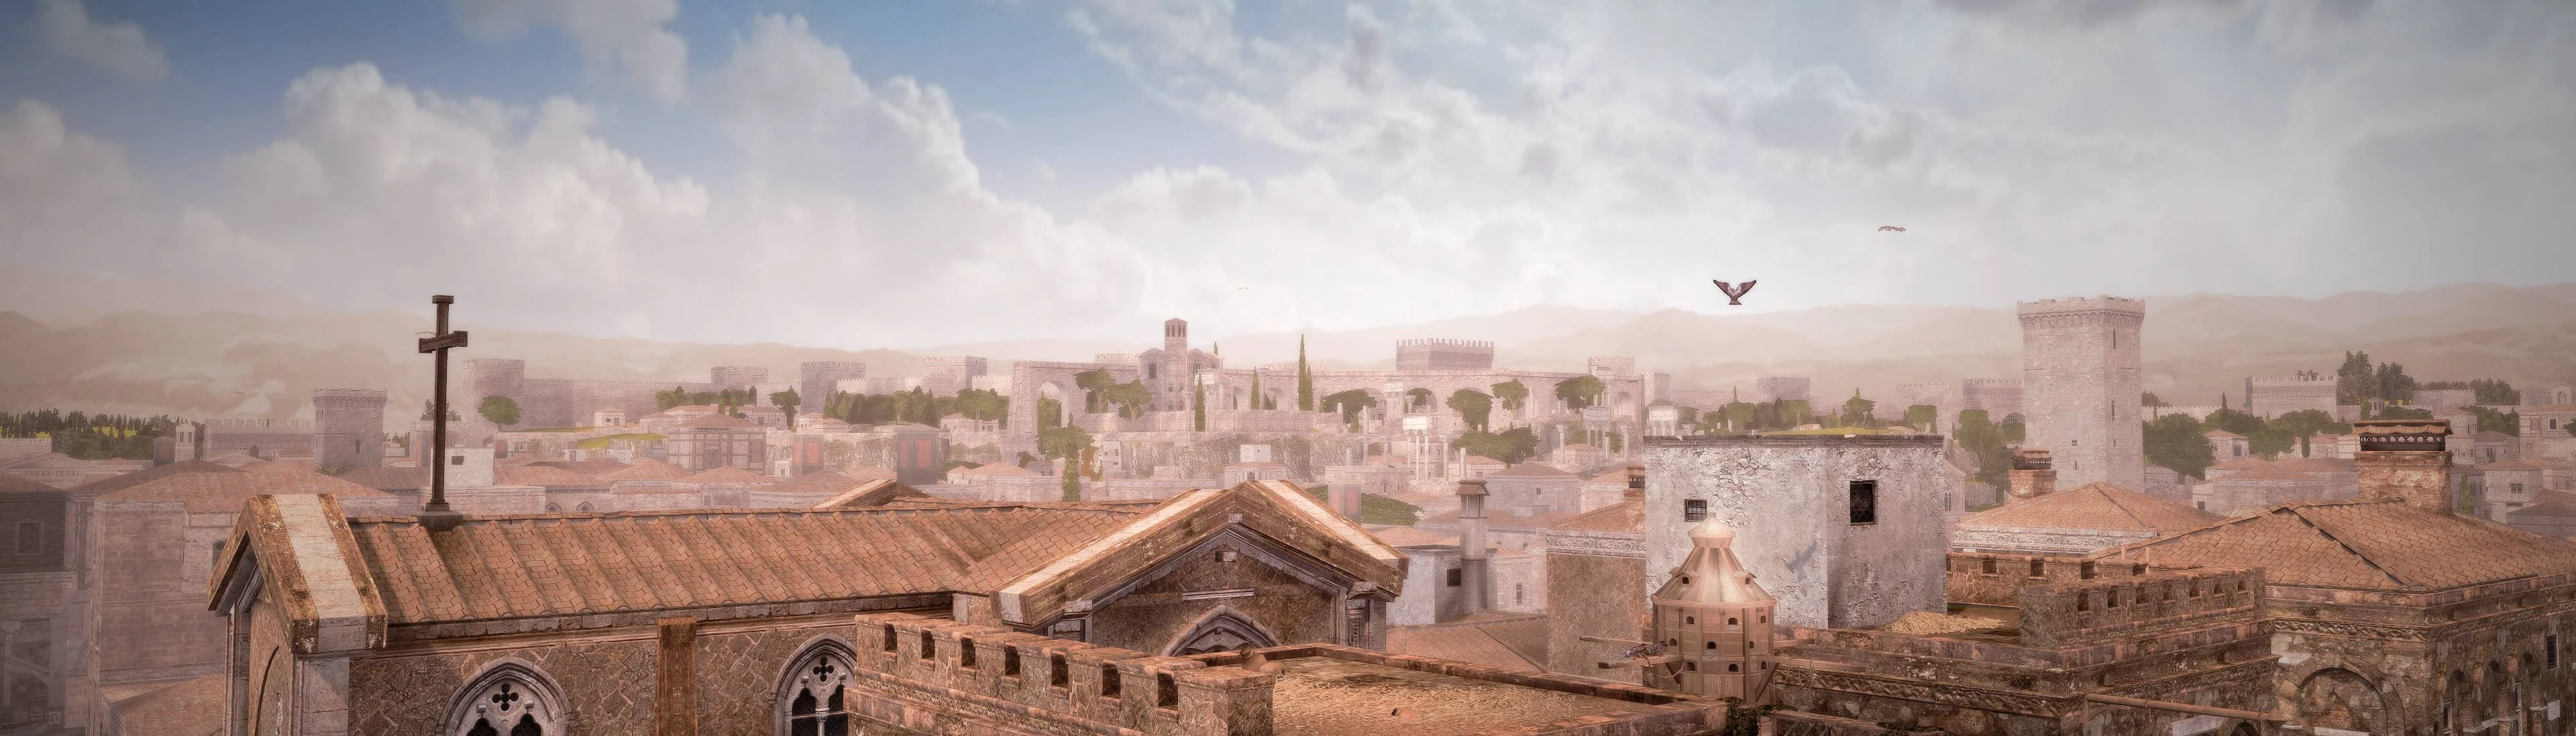 Assassin's Creed Brotherhood Ray Tracing RTGI Retextured Remastered  Graphics Mod 2021